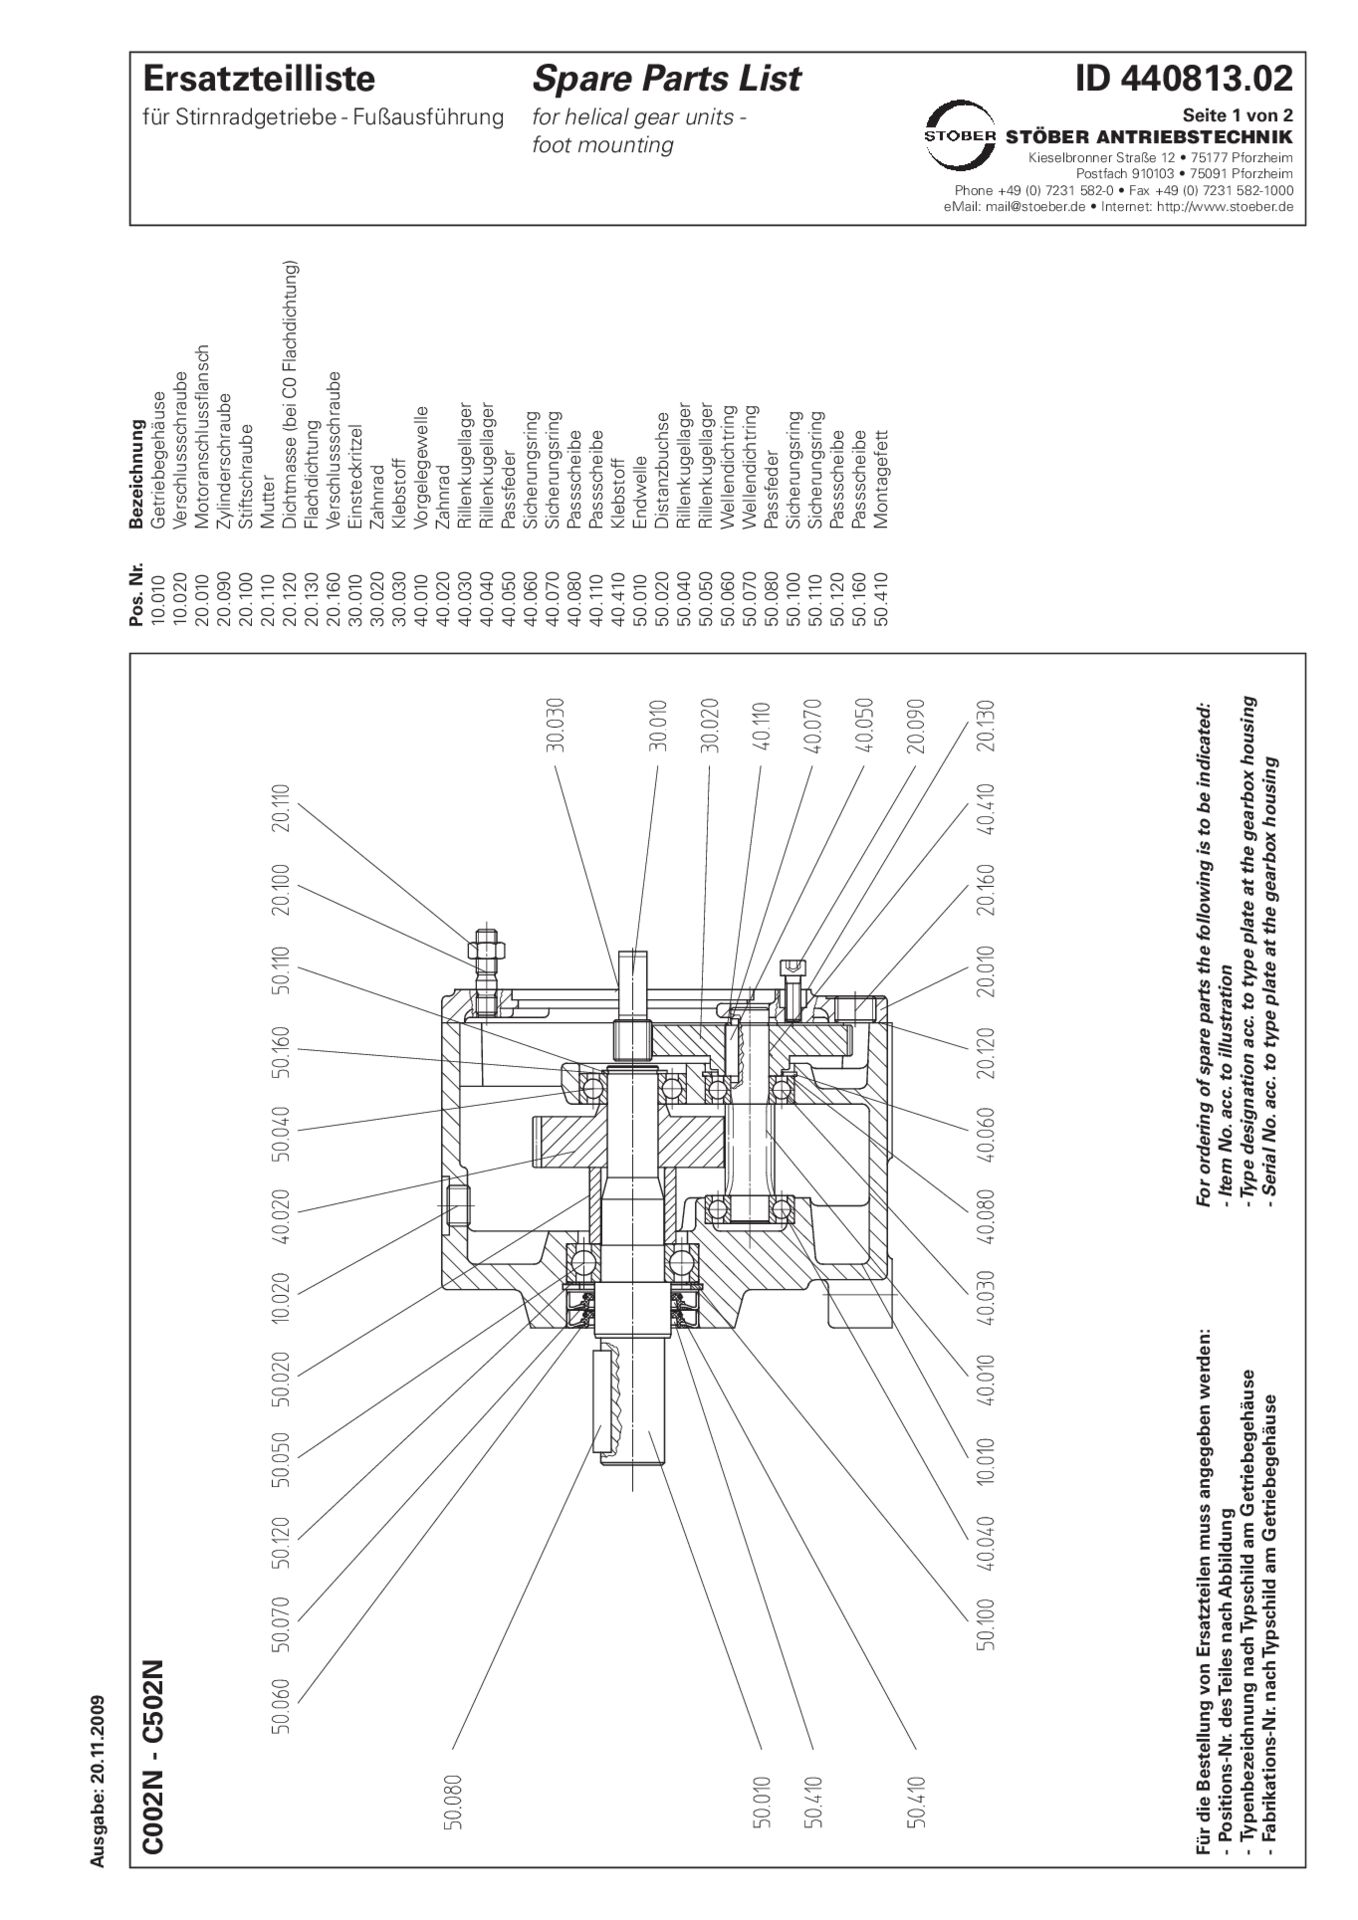 Replacement parts list helical gear units C002 C102 C202 C302 C402 C502 NErsatzteilliste Stirnradgetriebe C002 C102 C202 C302 C402 C502 N